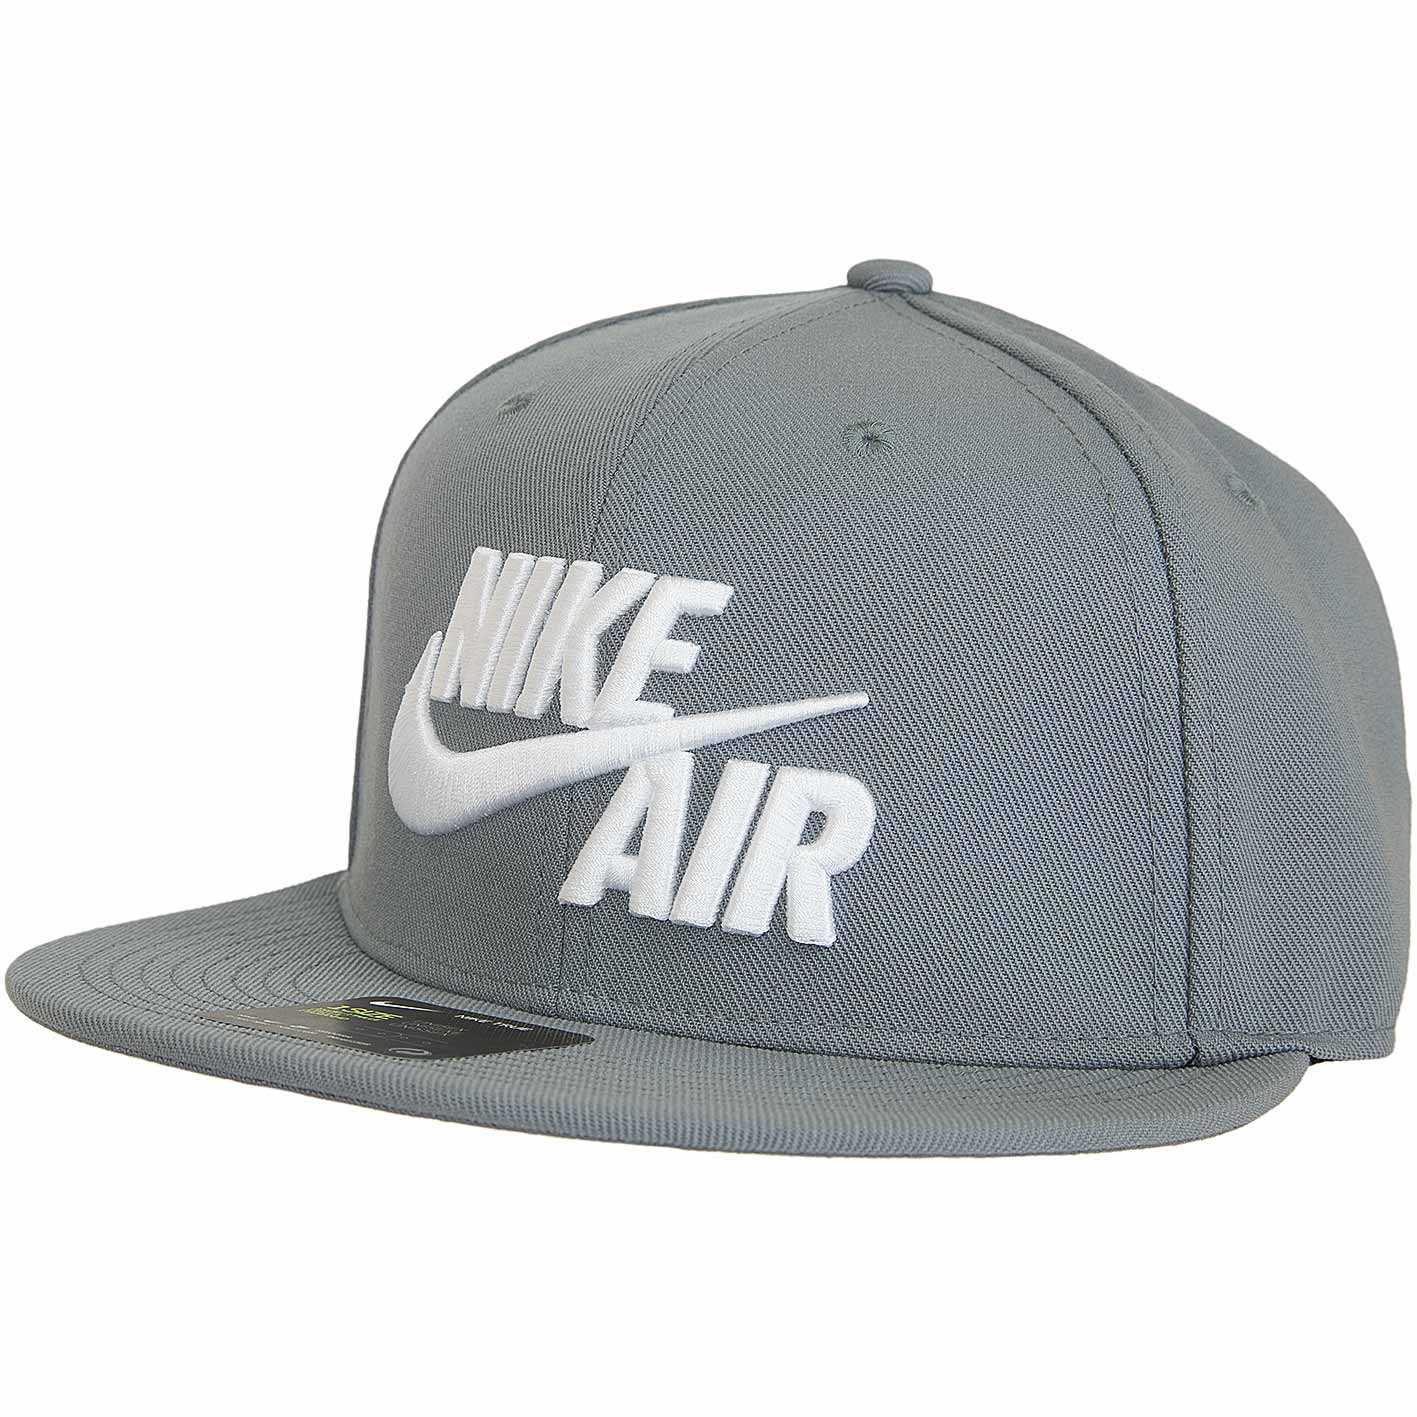 ☆ Nike Snapback Cap Air True Classic grau/weiß - hier bestellen!